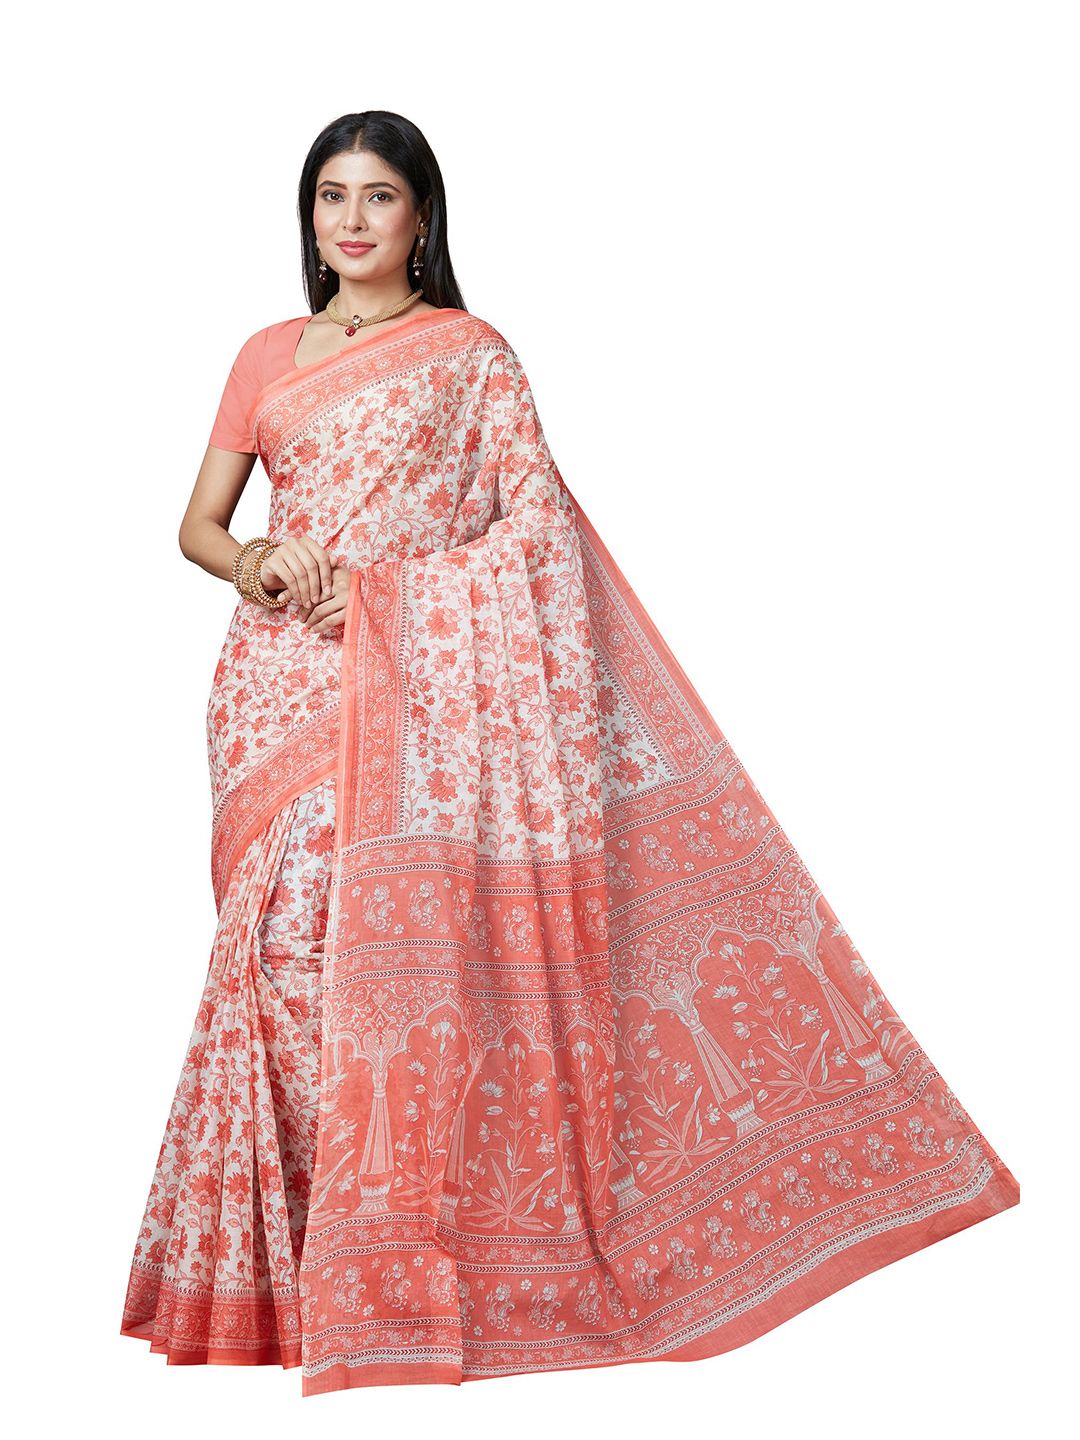 SHANVIKA Peach-Coloured & Cream-Coloured Floral Pure Cotton Block Print Saree Price in India